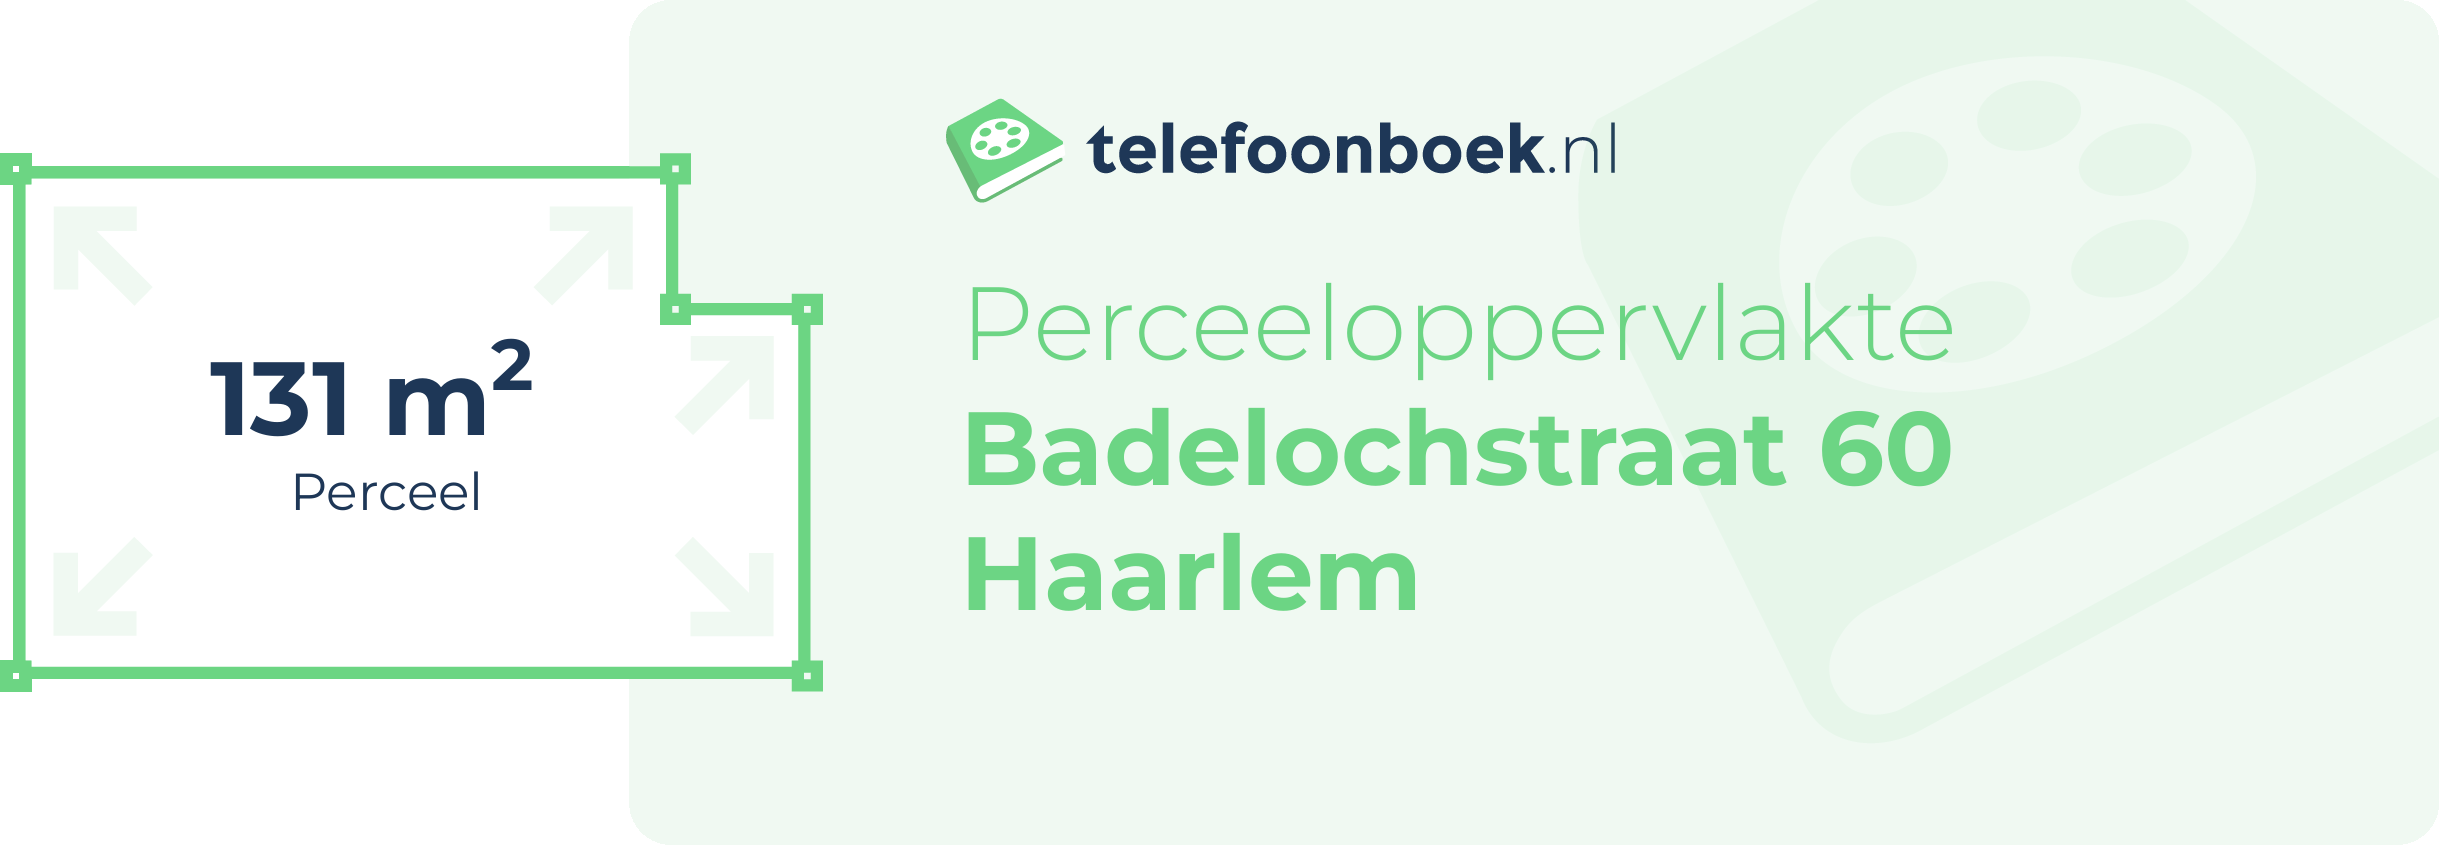 Perceeloppervlakte Badelochstraat 60 Haarlem